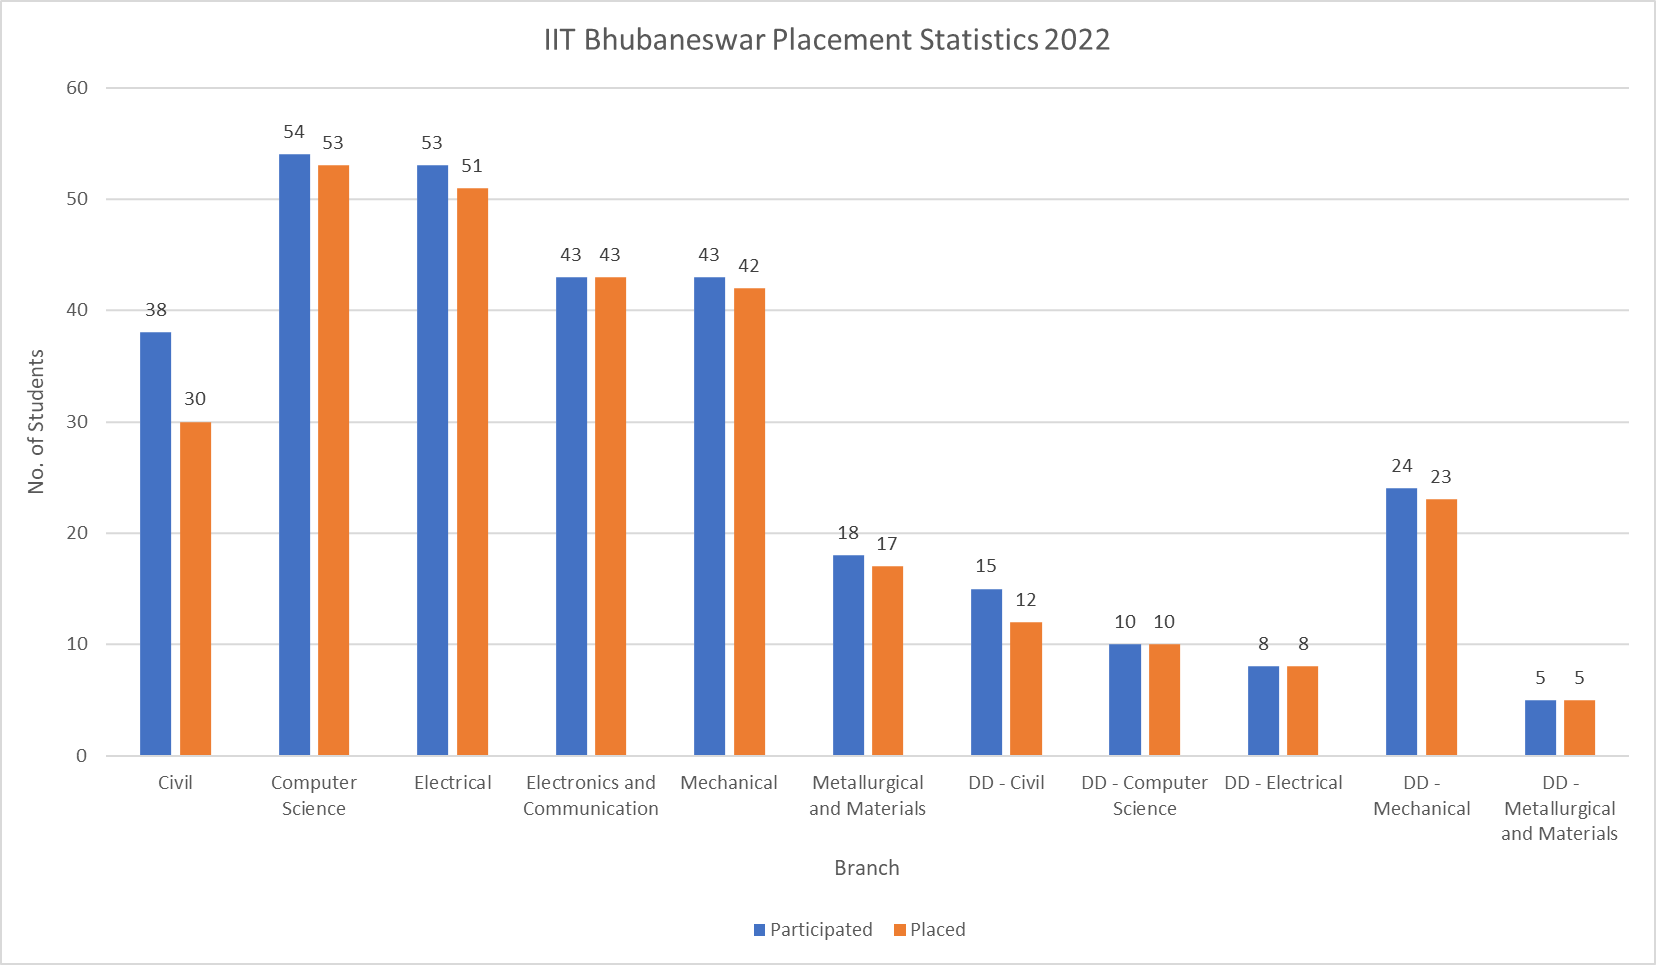 IIT Bhubaneswar Placement Statistics 2022